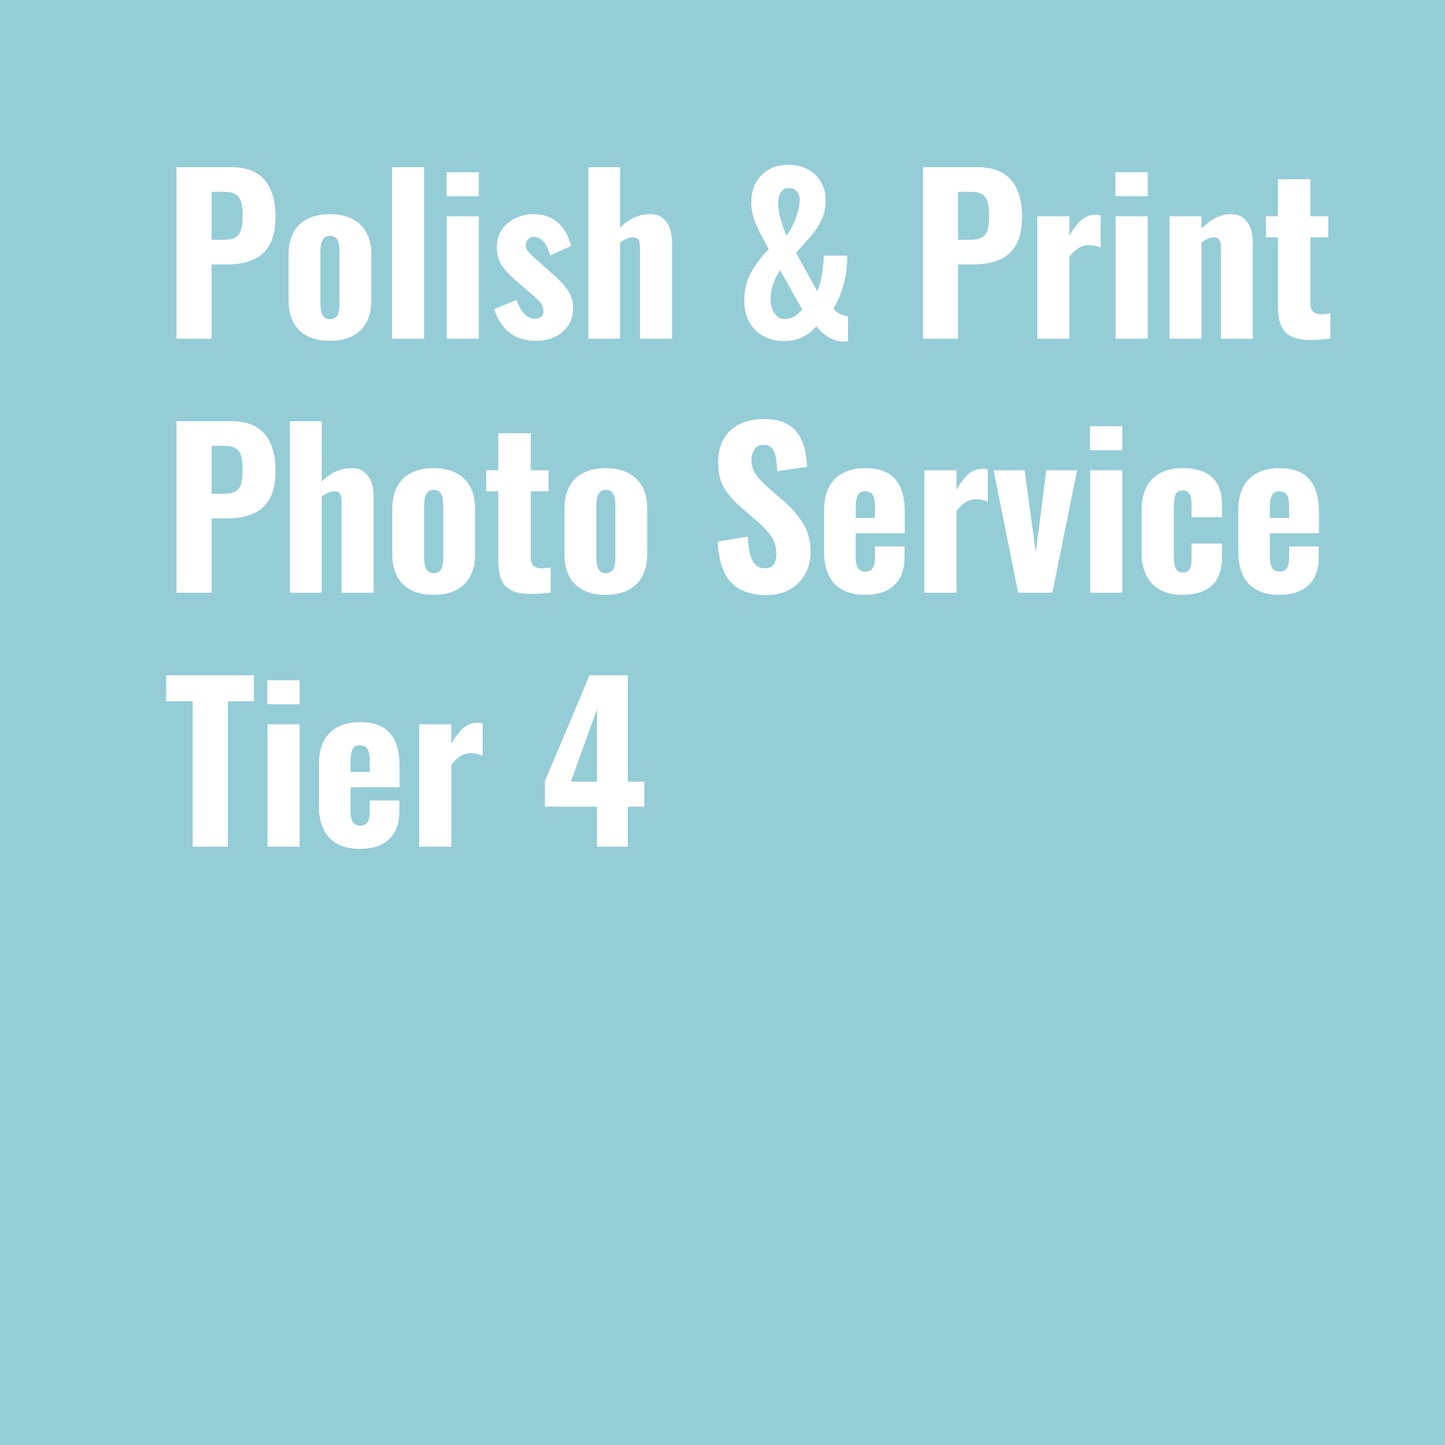 Photo Service Tier 4 - "Polish & Print" - by K. A. Artist Shop Services - K. A. Artist Shop